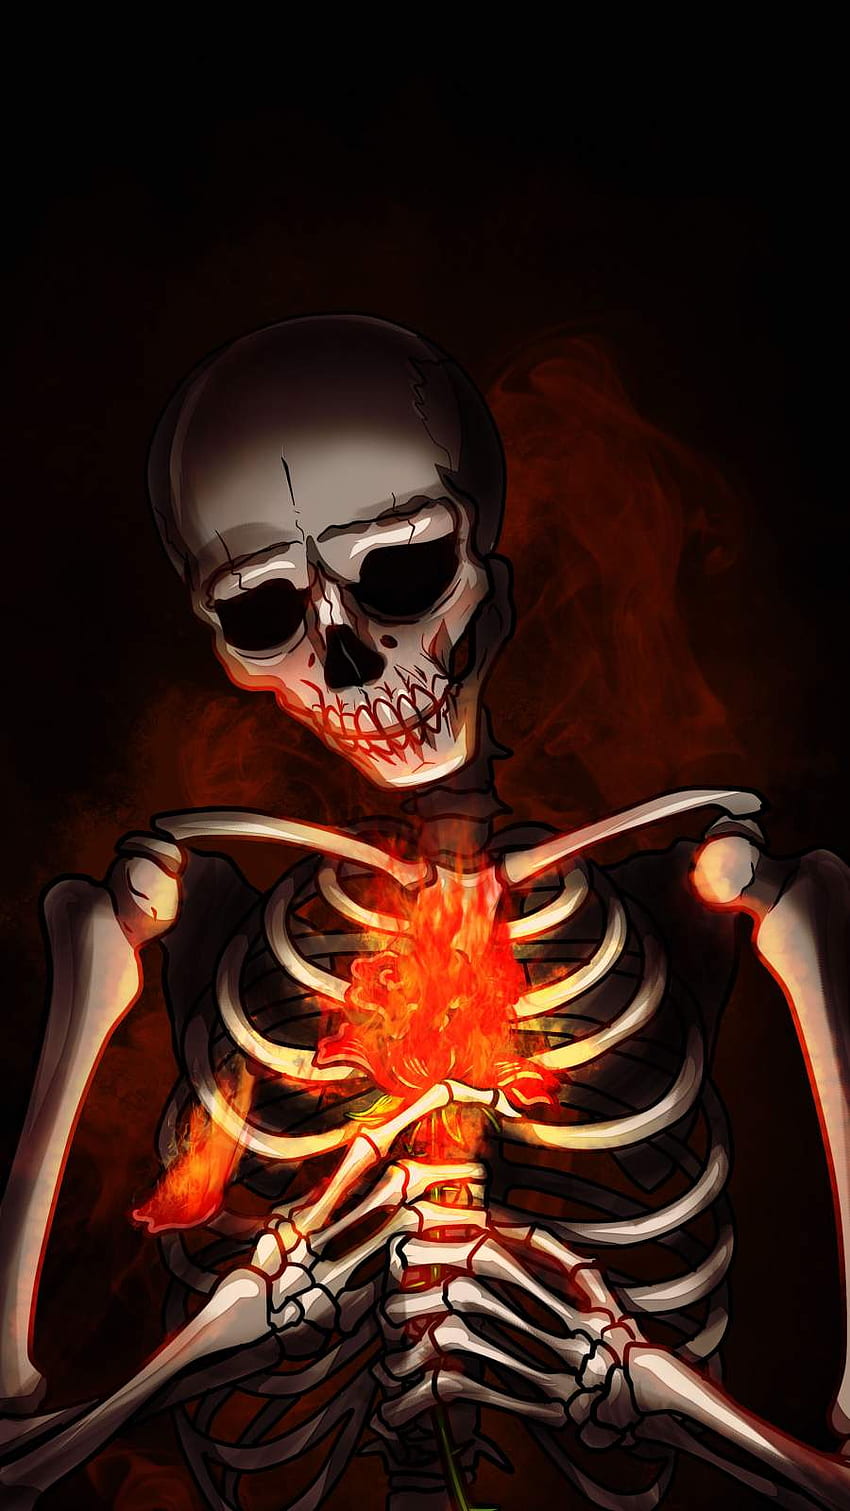 Broken Human Skeleton Heart On Black Stock Vector Royalty Free 1581923098   Shutterstock